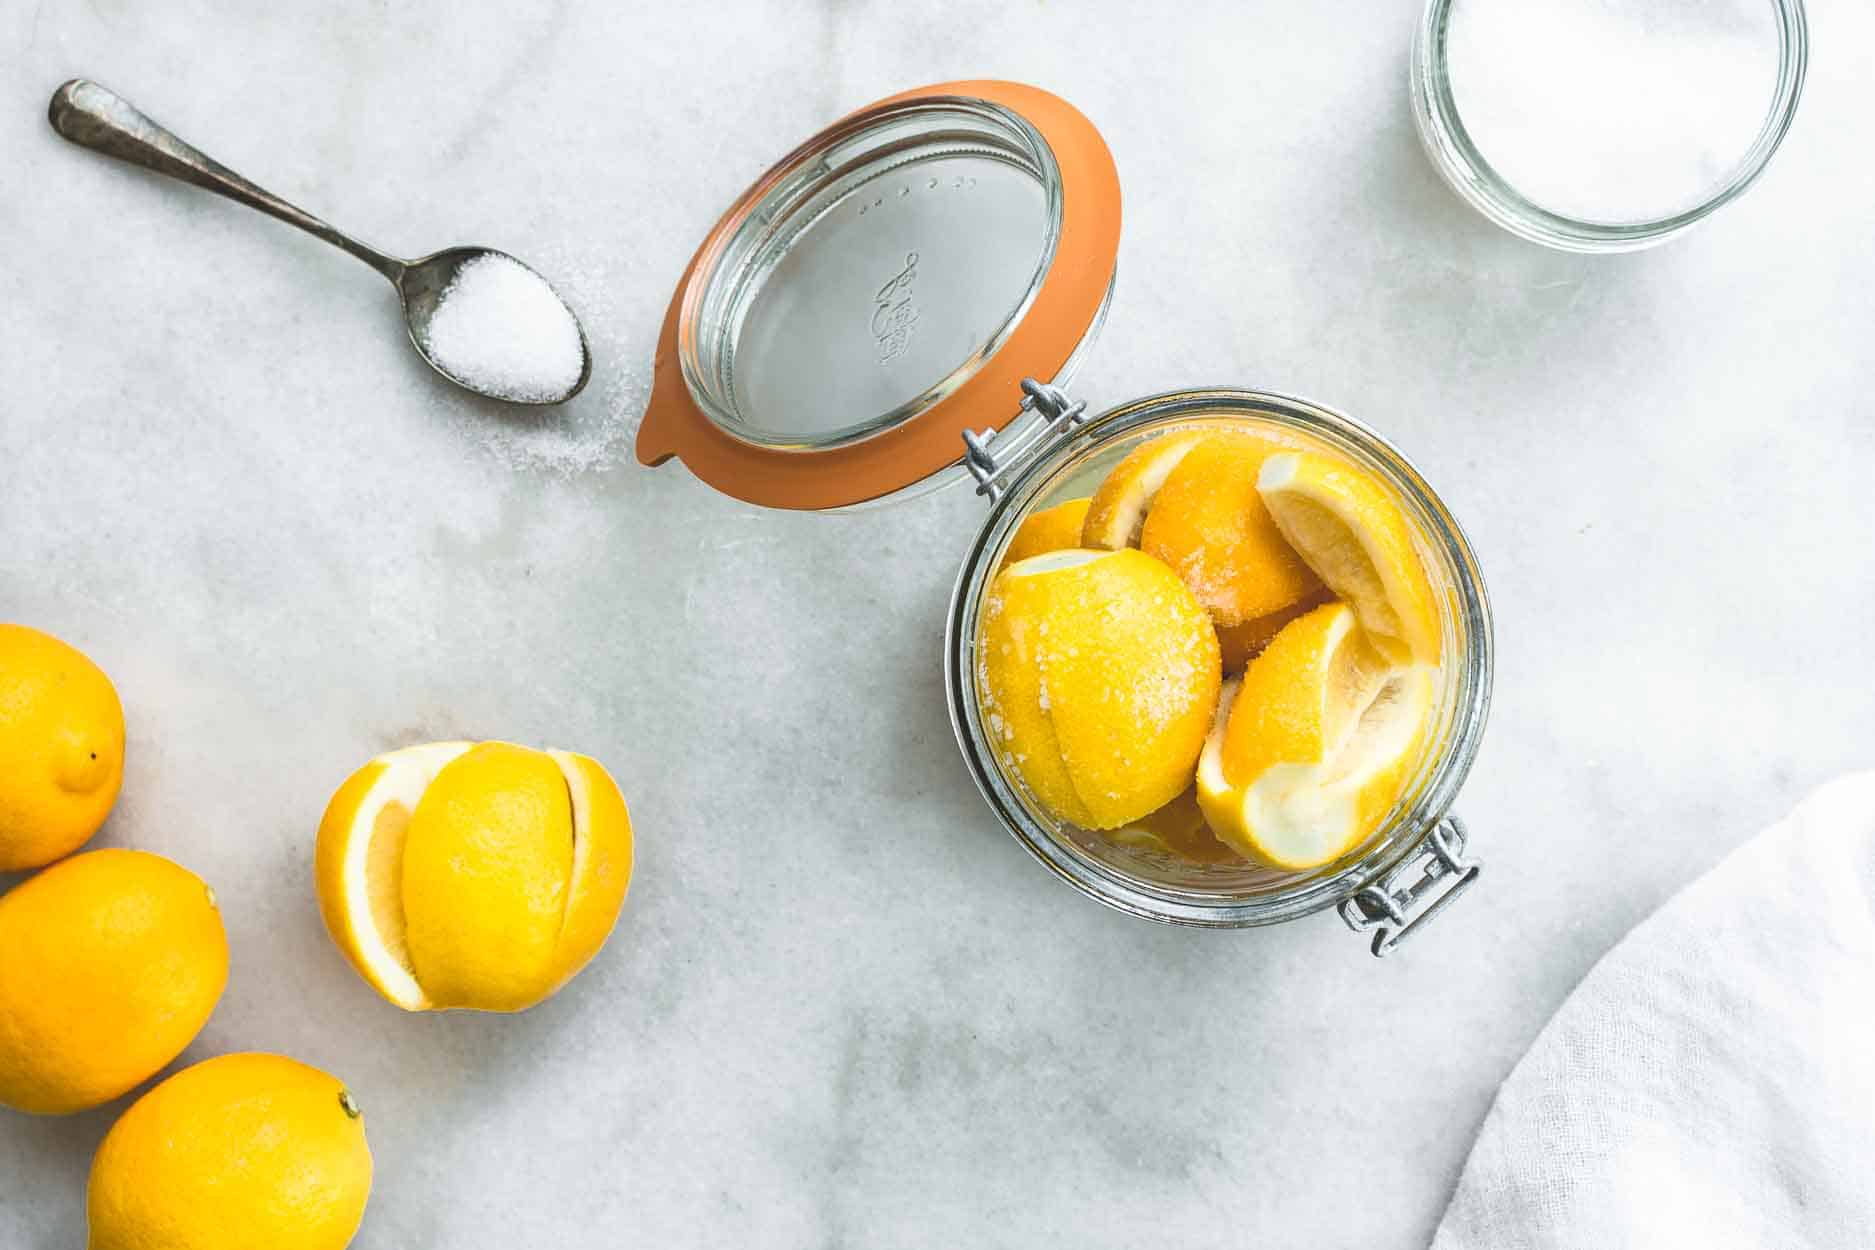 How to make preserved lemons